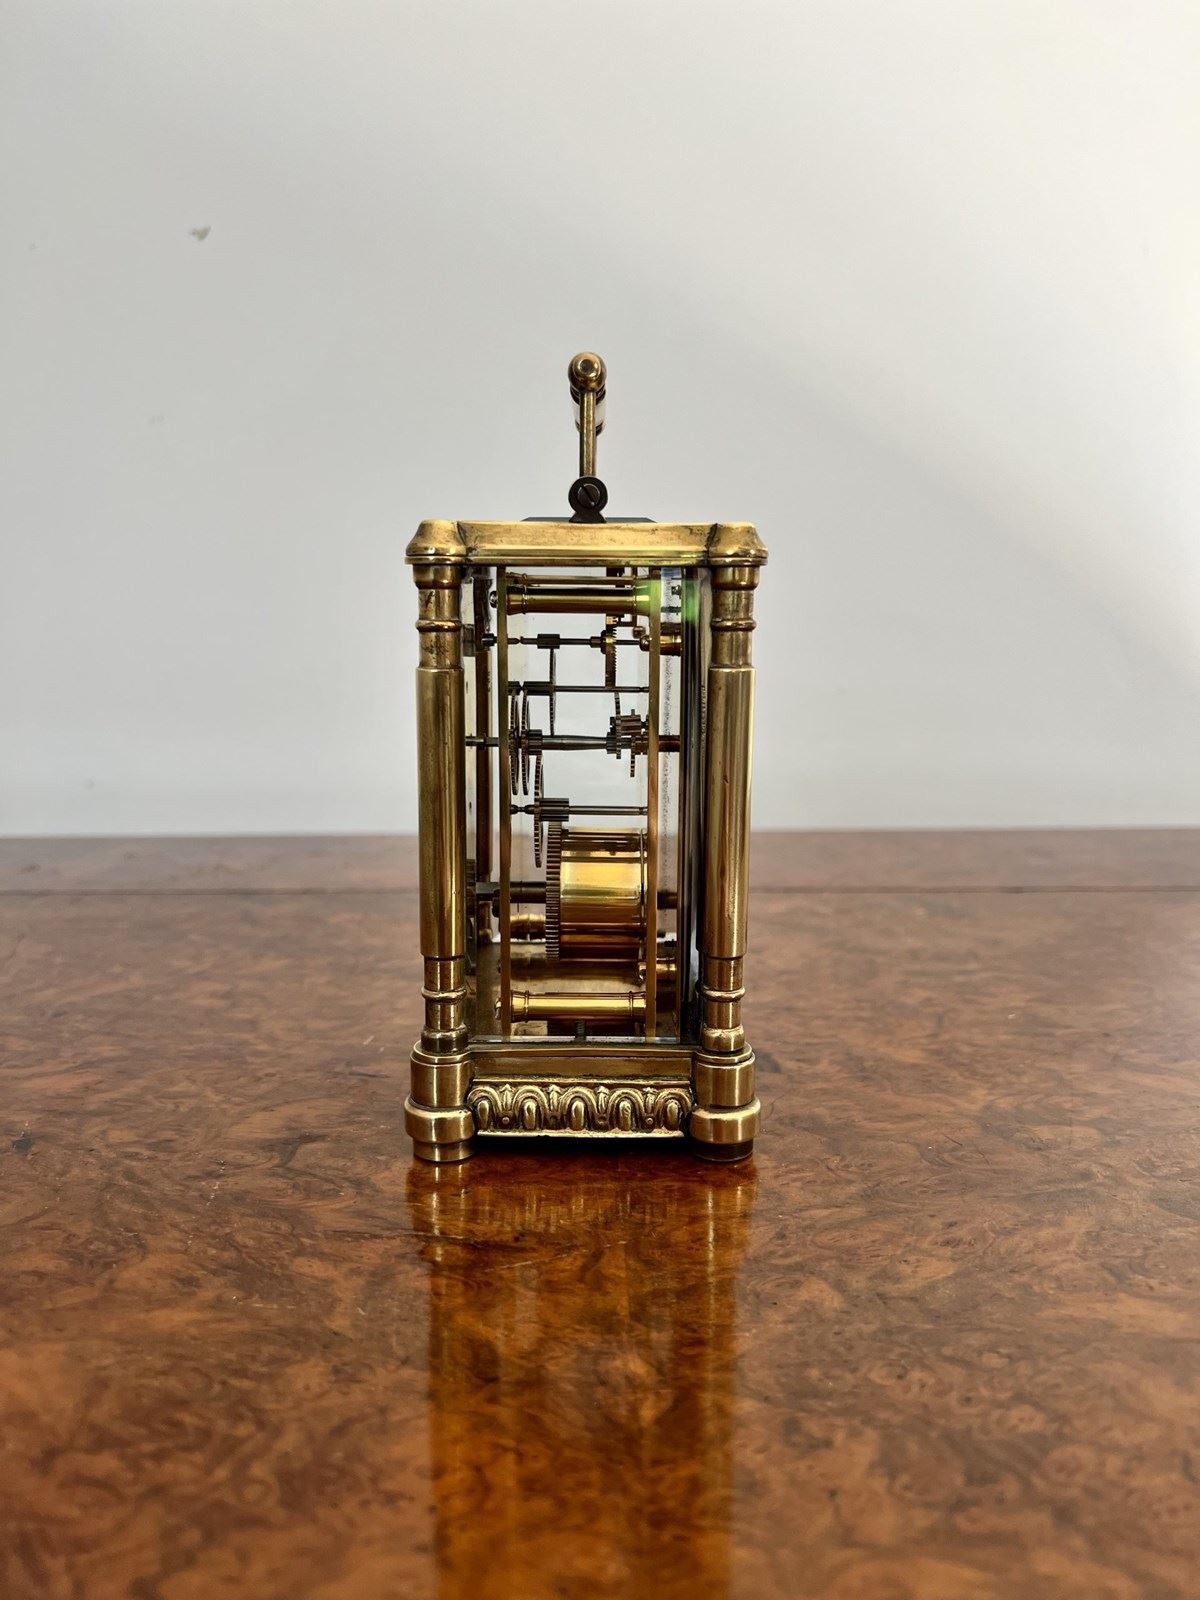 Victorian Brass Carriage Clock, 1880s